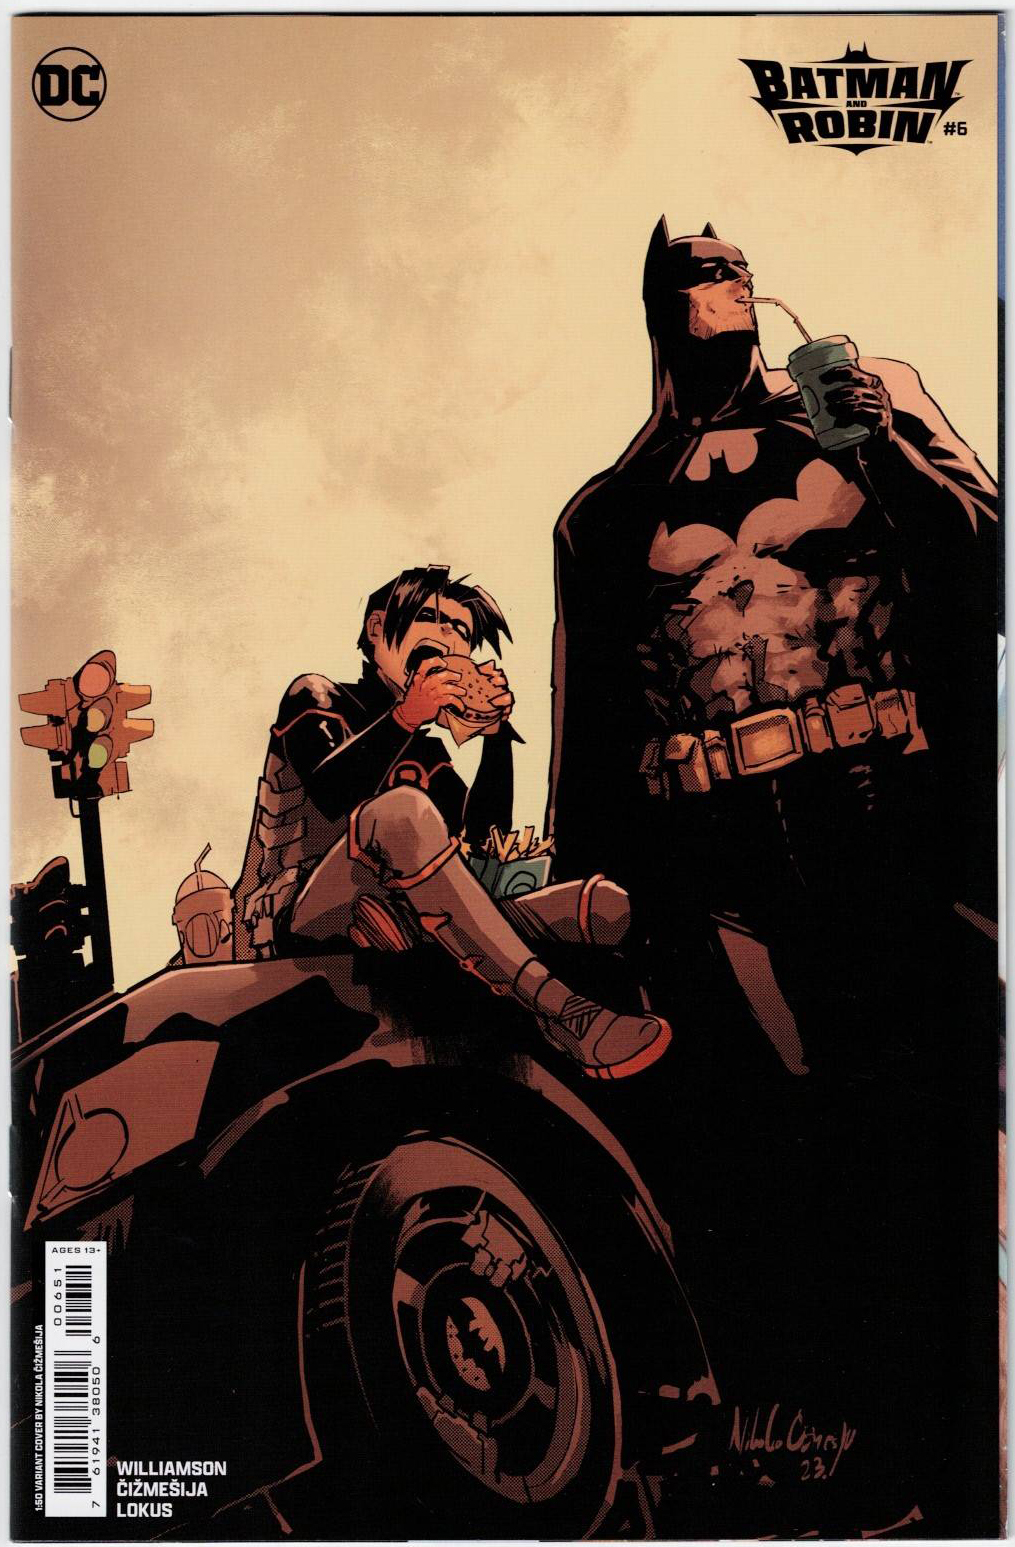 Batman And Robin #6 front